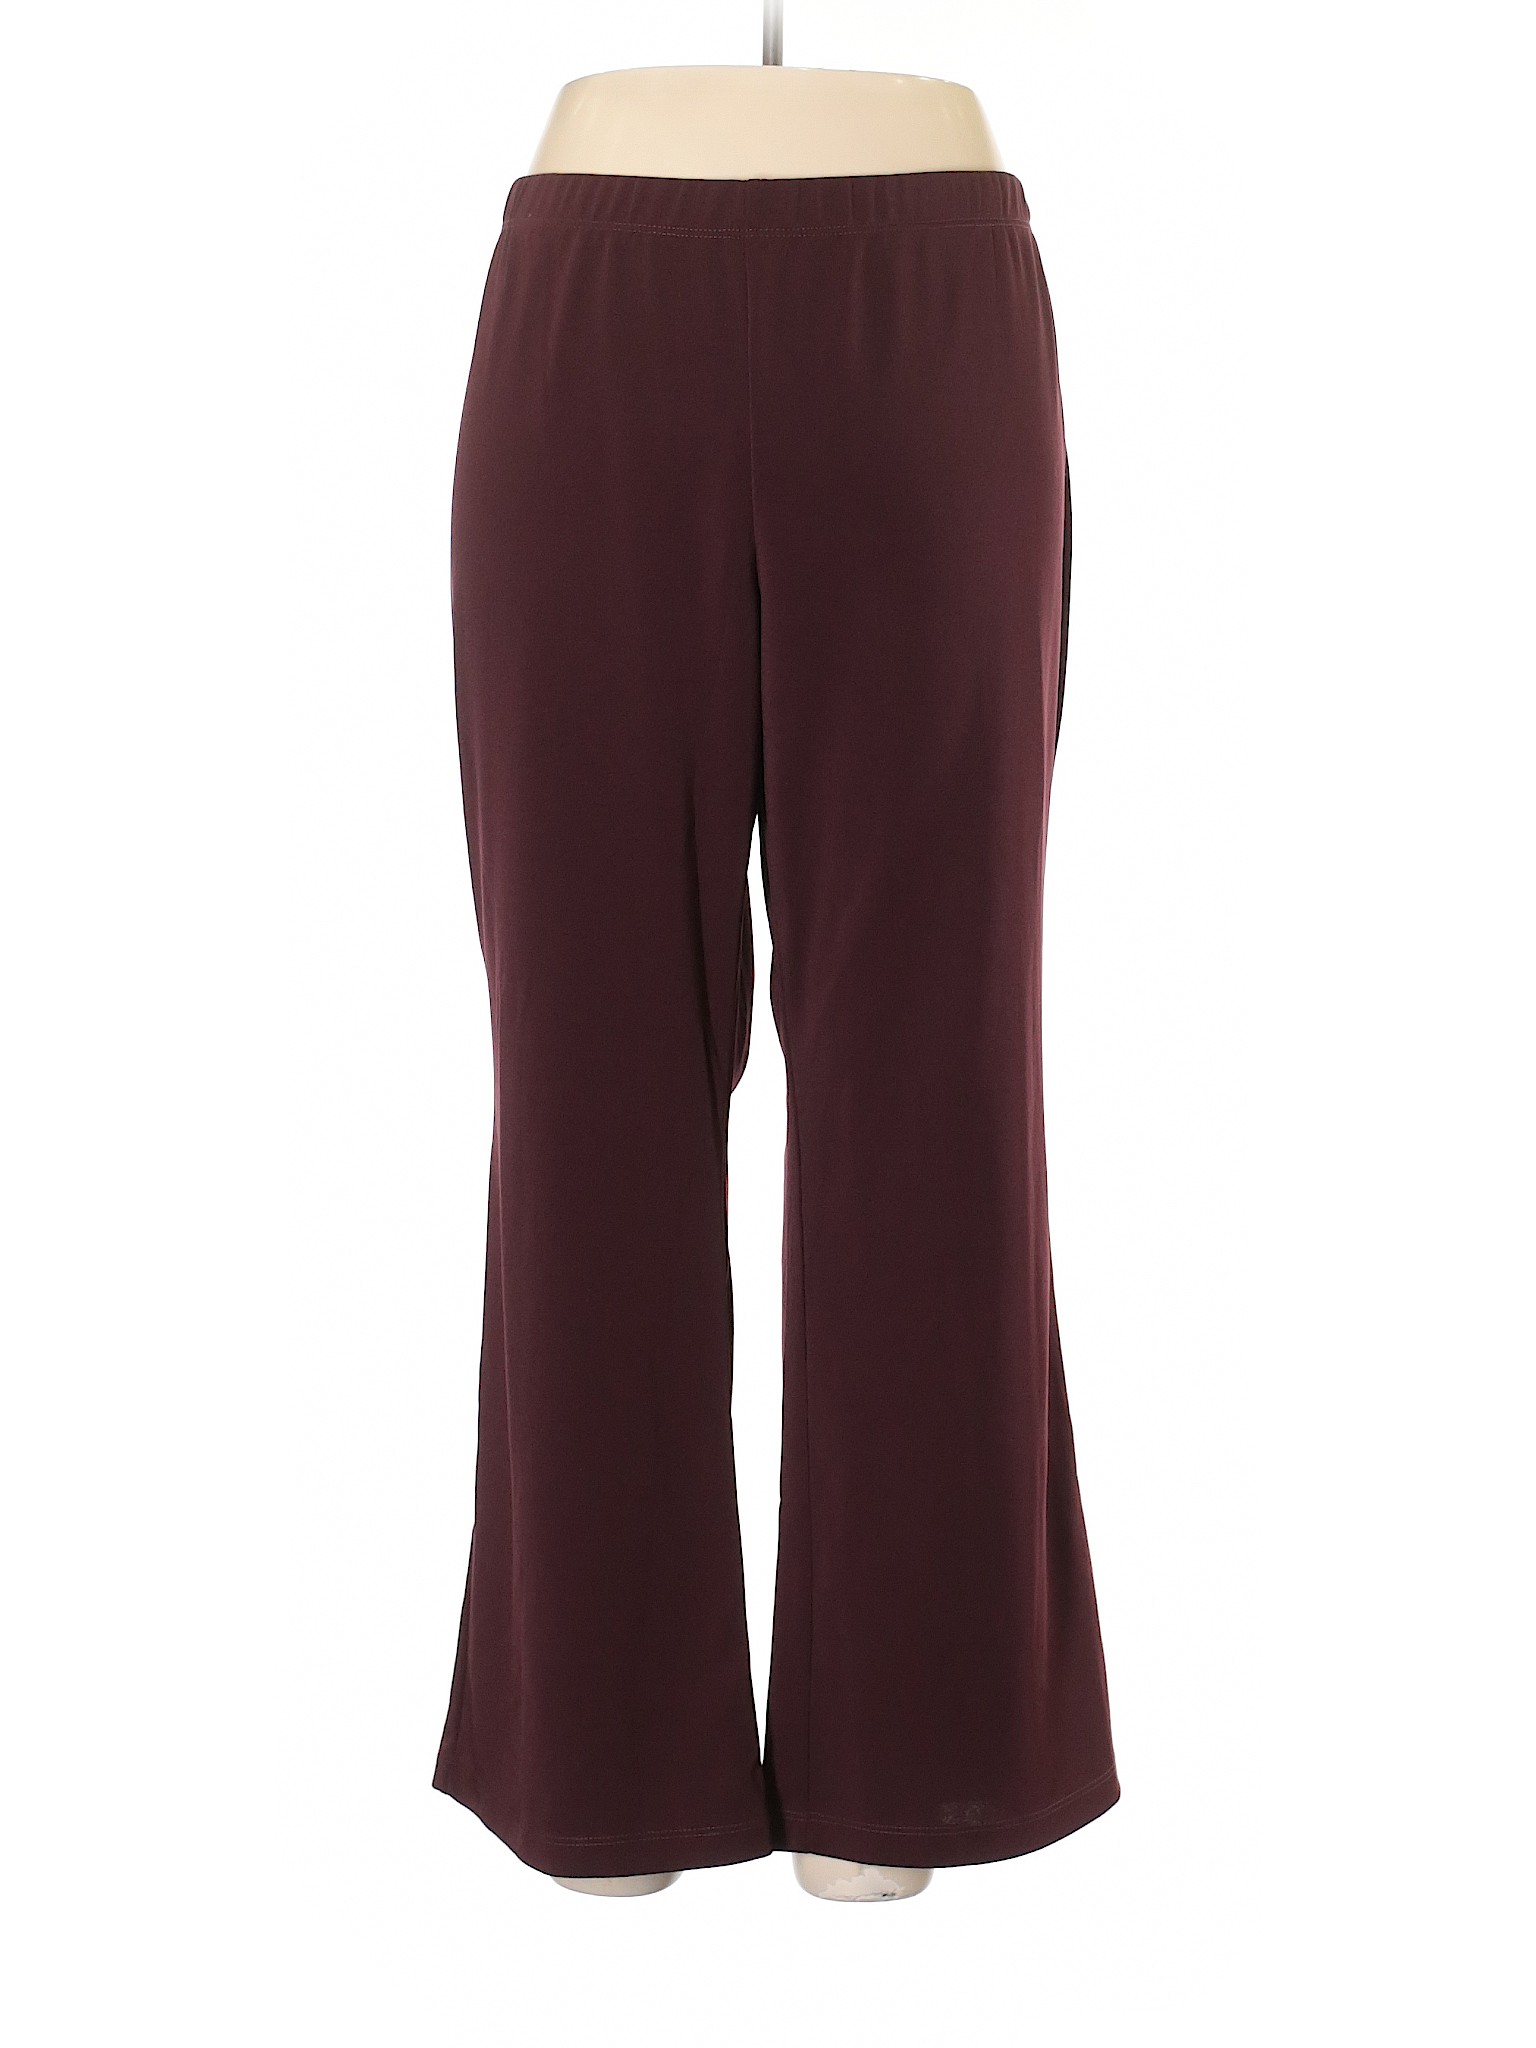 Susan Graver Women Purple Casual Pants XL Petites | eBay